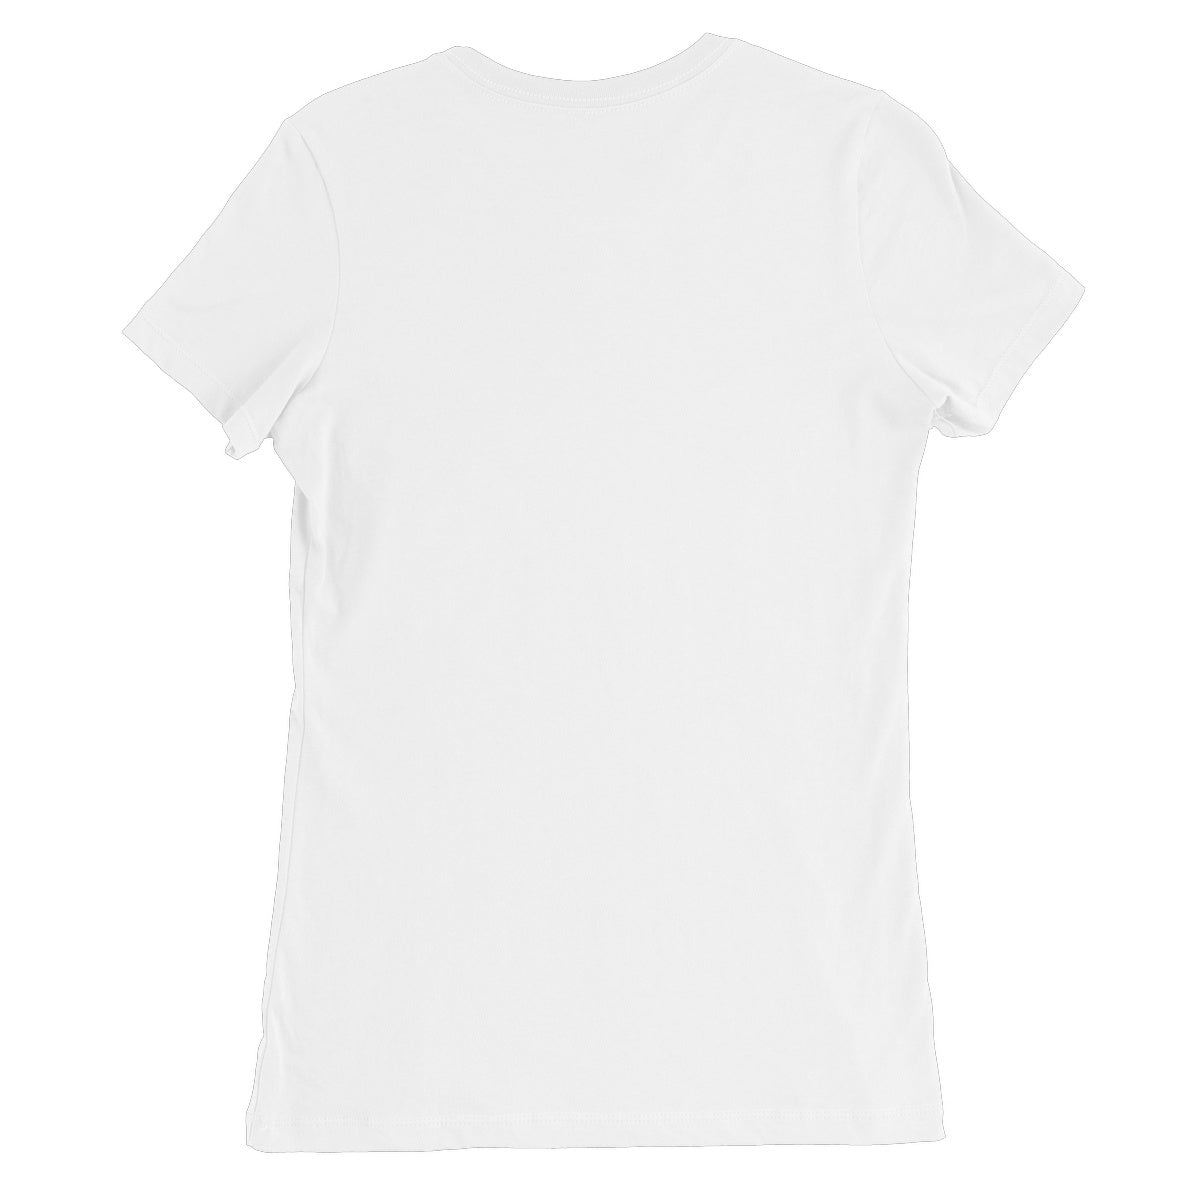 Warhol Style Accordions Women's T-Shirt